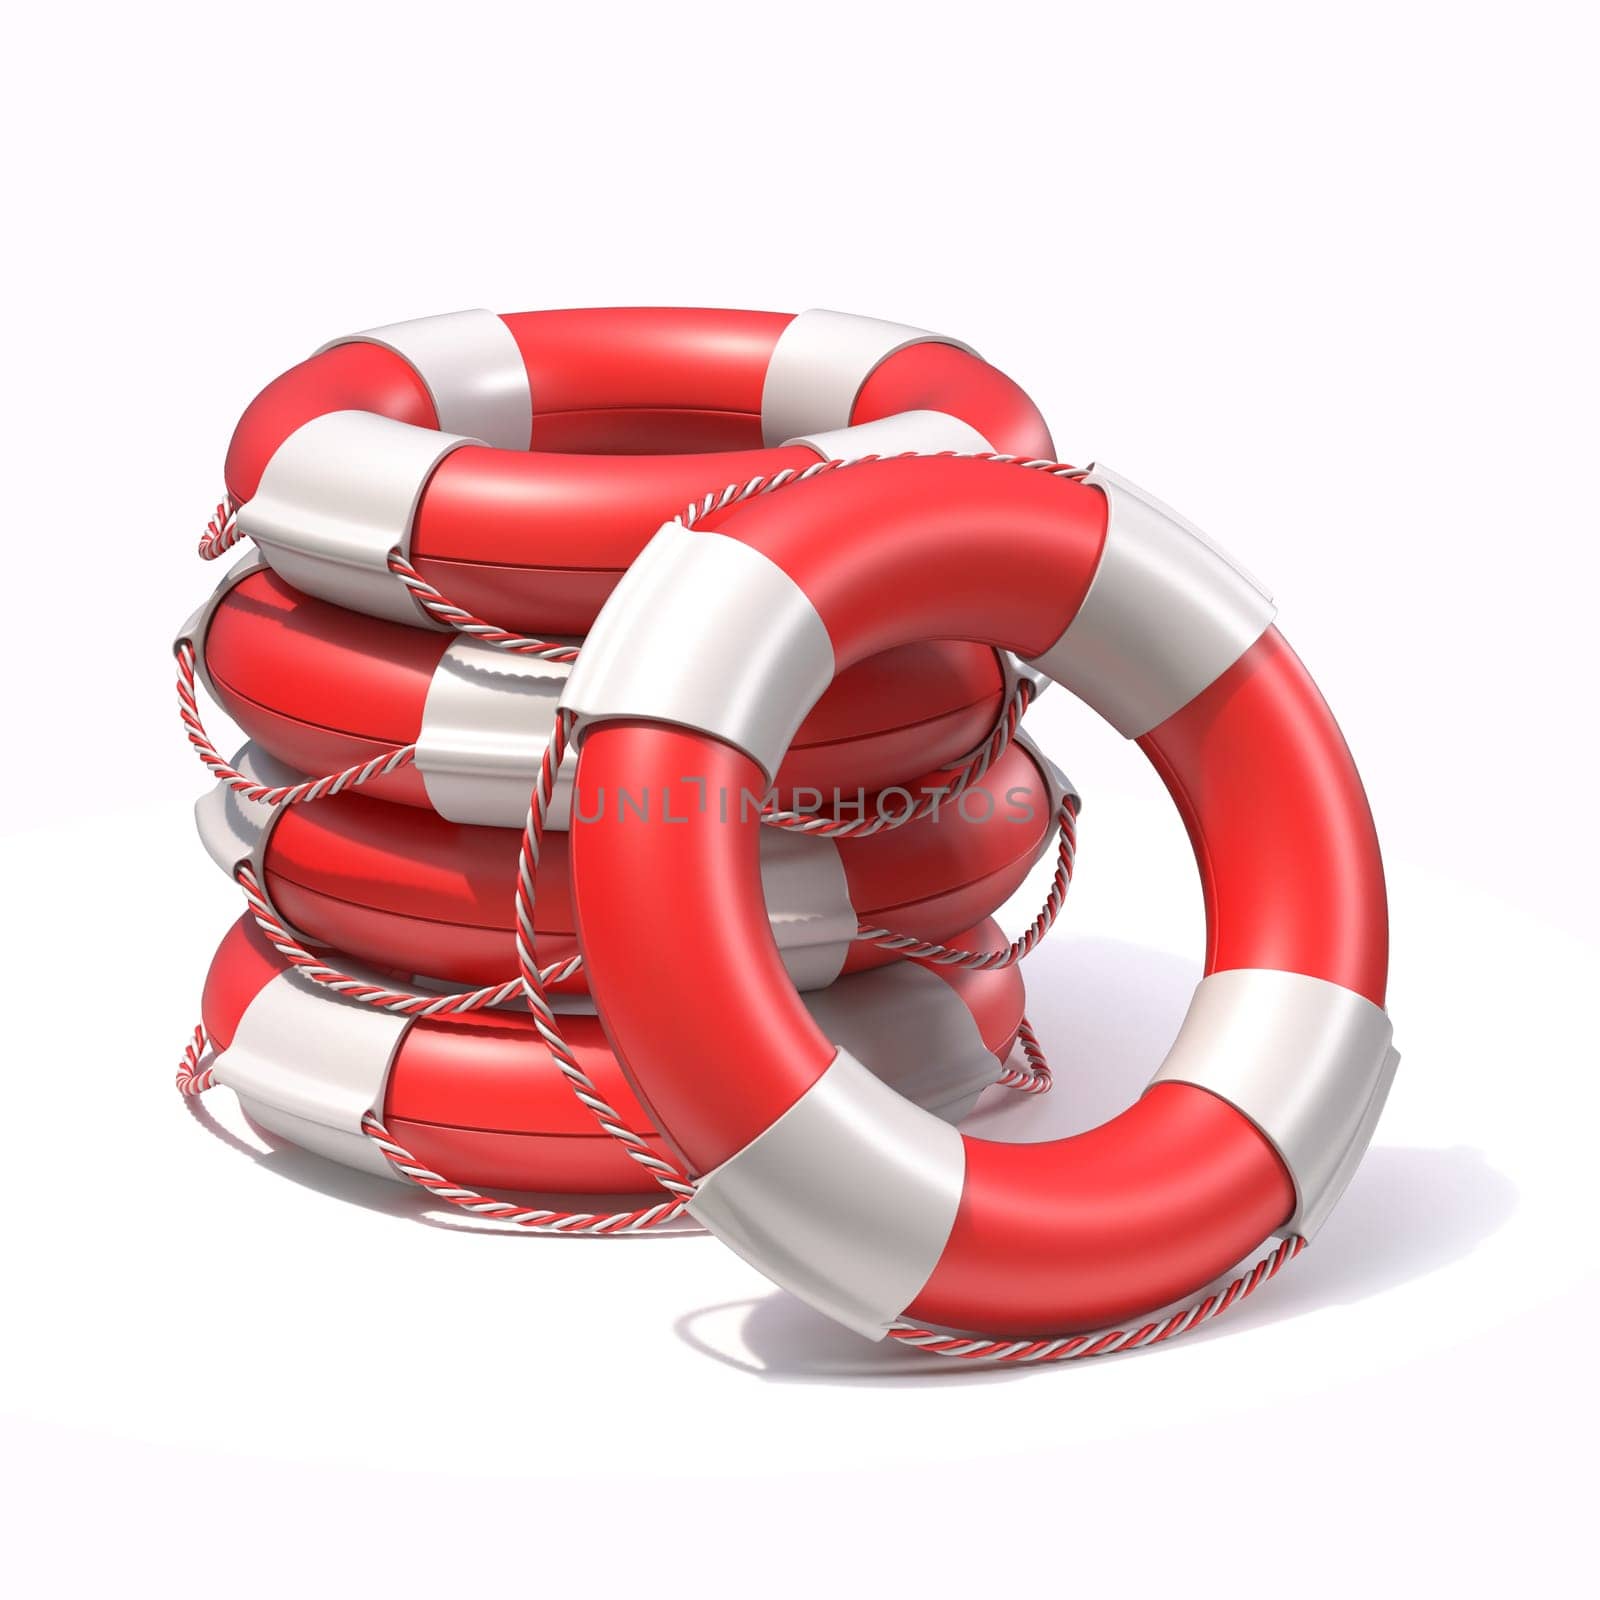 Lifebuoy 3D rendering illustration isolated on white background